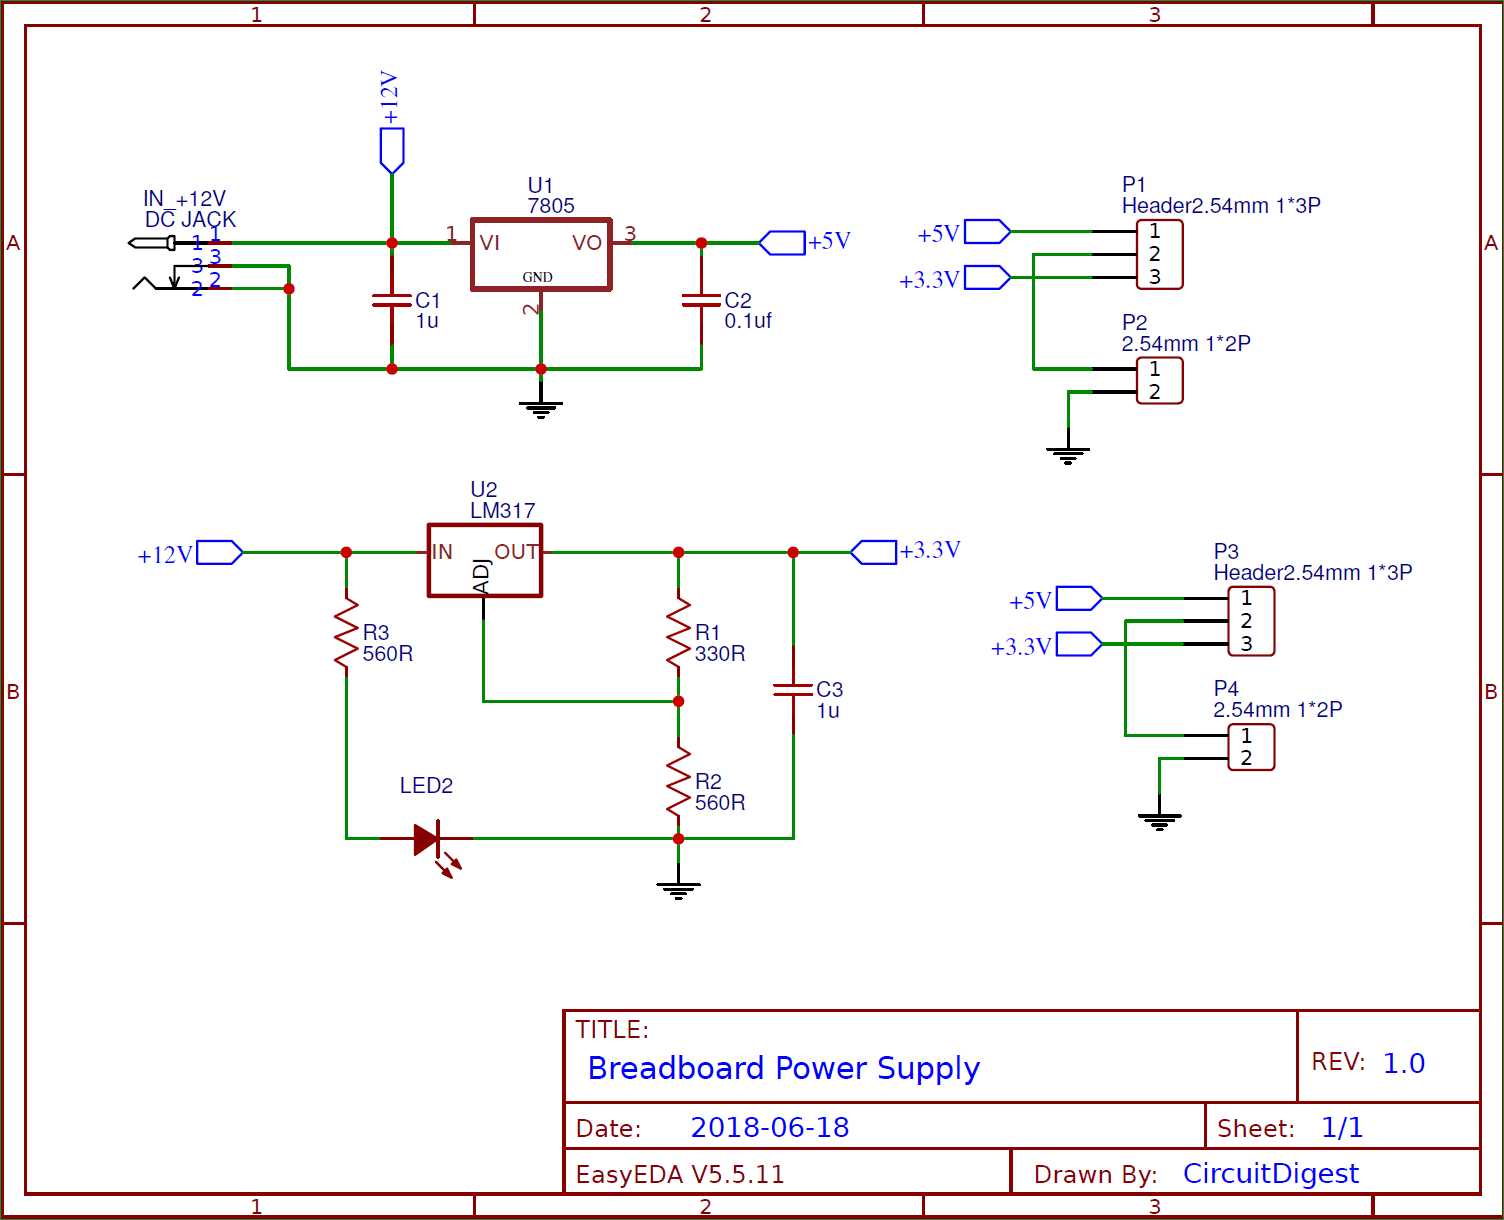 Circuit Diagram for DIY Breadboard Power Supply Circuit on PCB